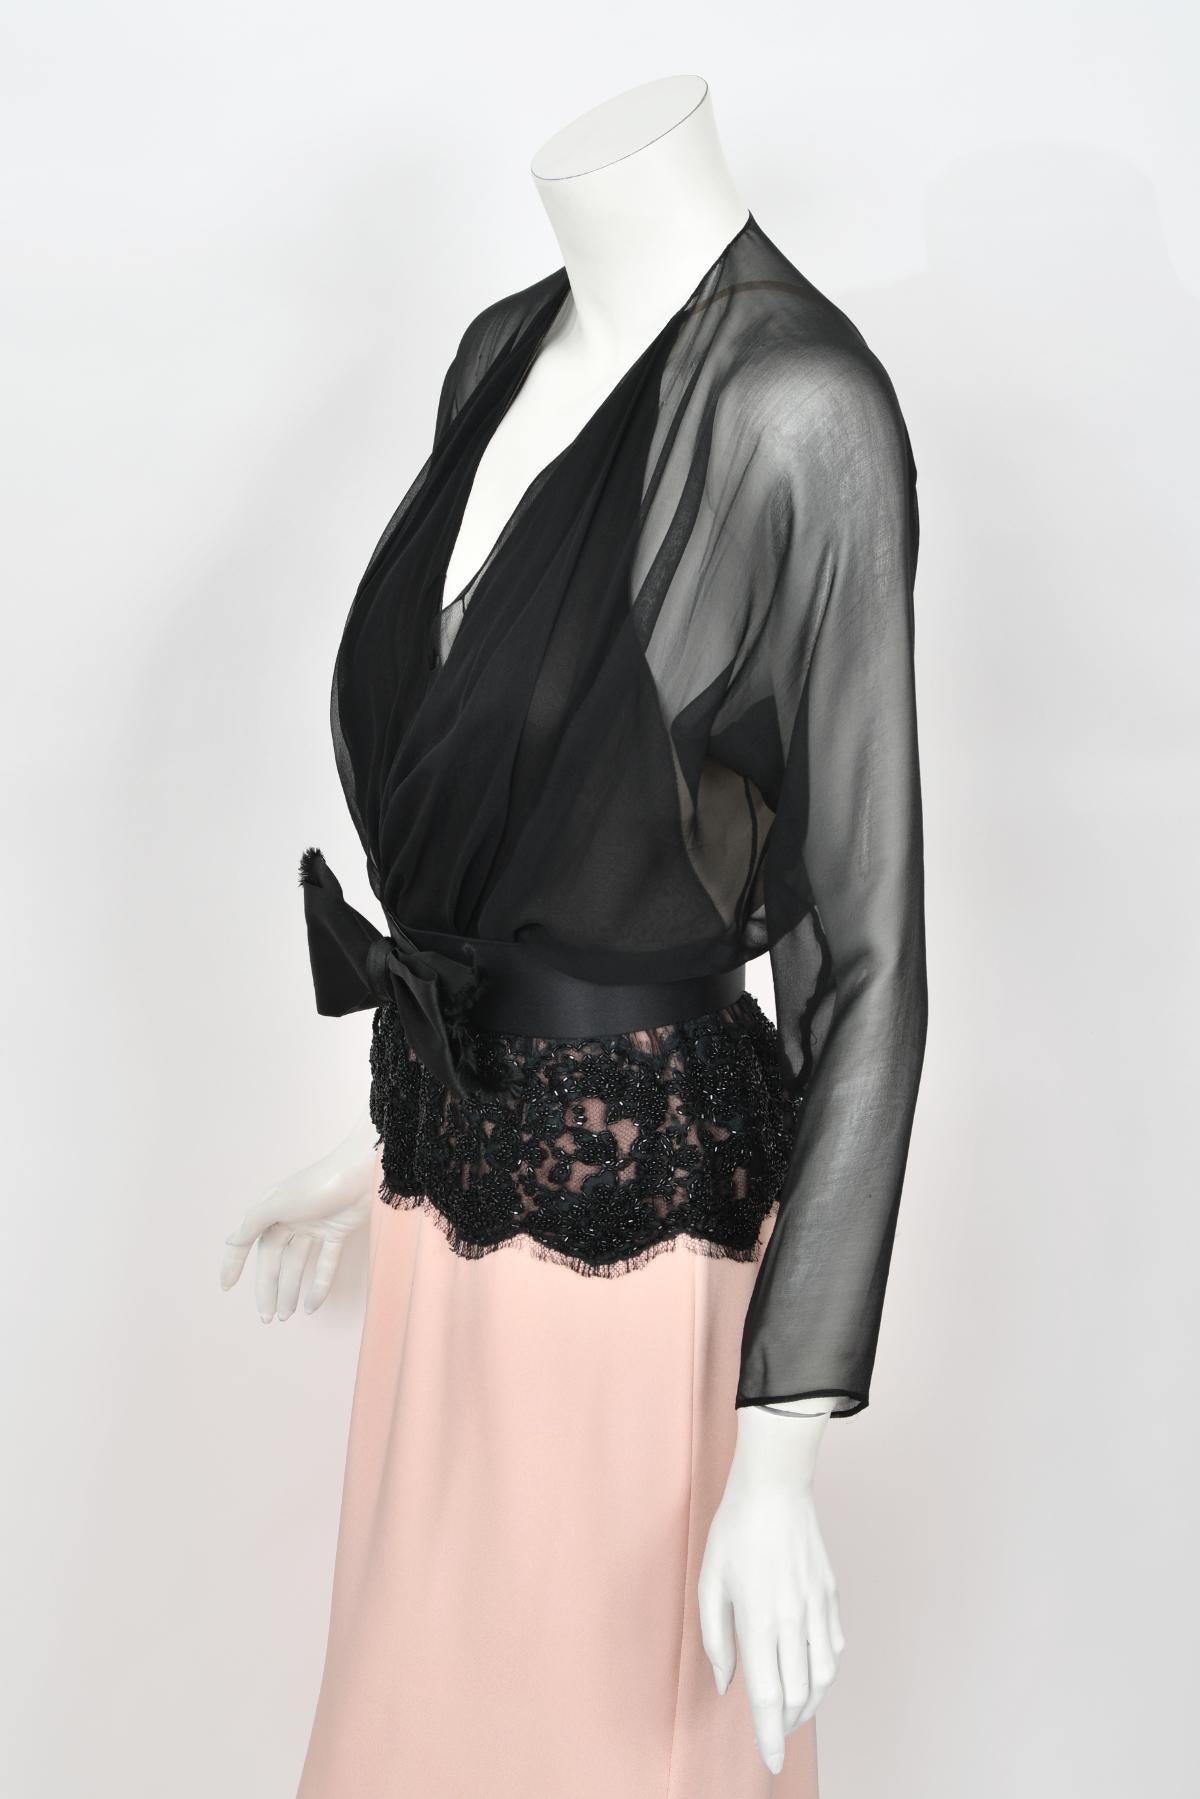 1986 Oscar de la Renta Documented Runway Black Sheer Chiffon & Pink Silk Gown For Sale 2